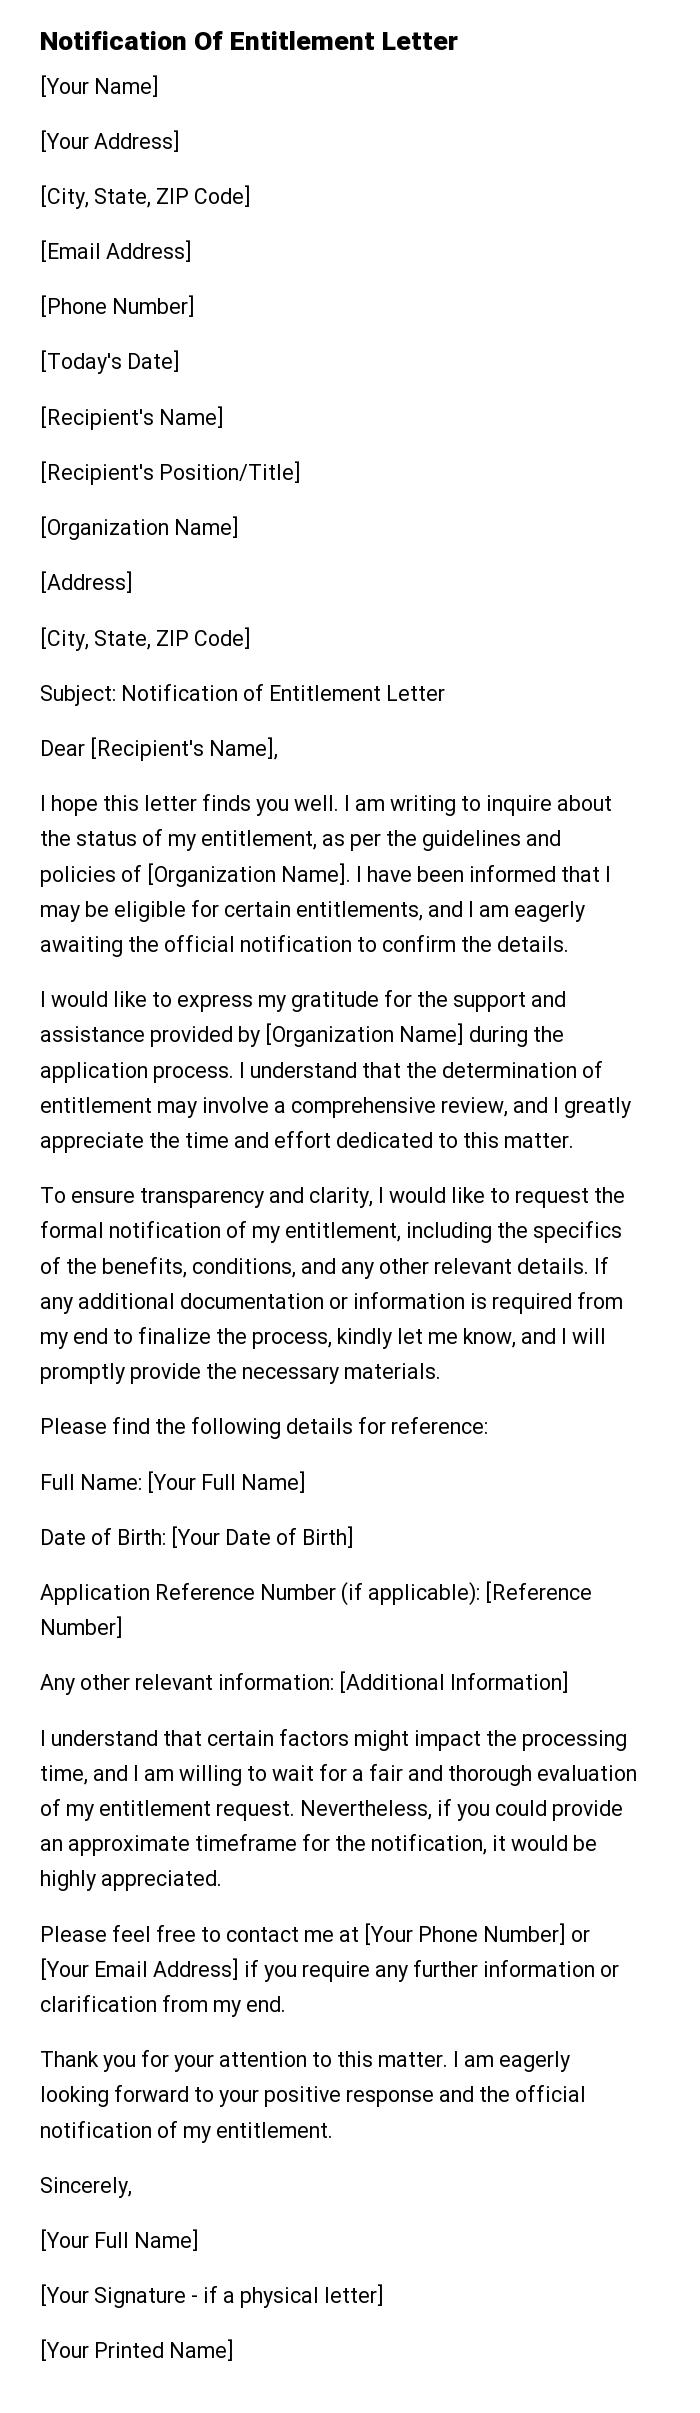 Notification Of Entitlement Letter